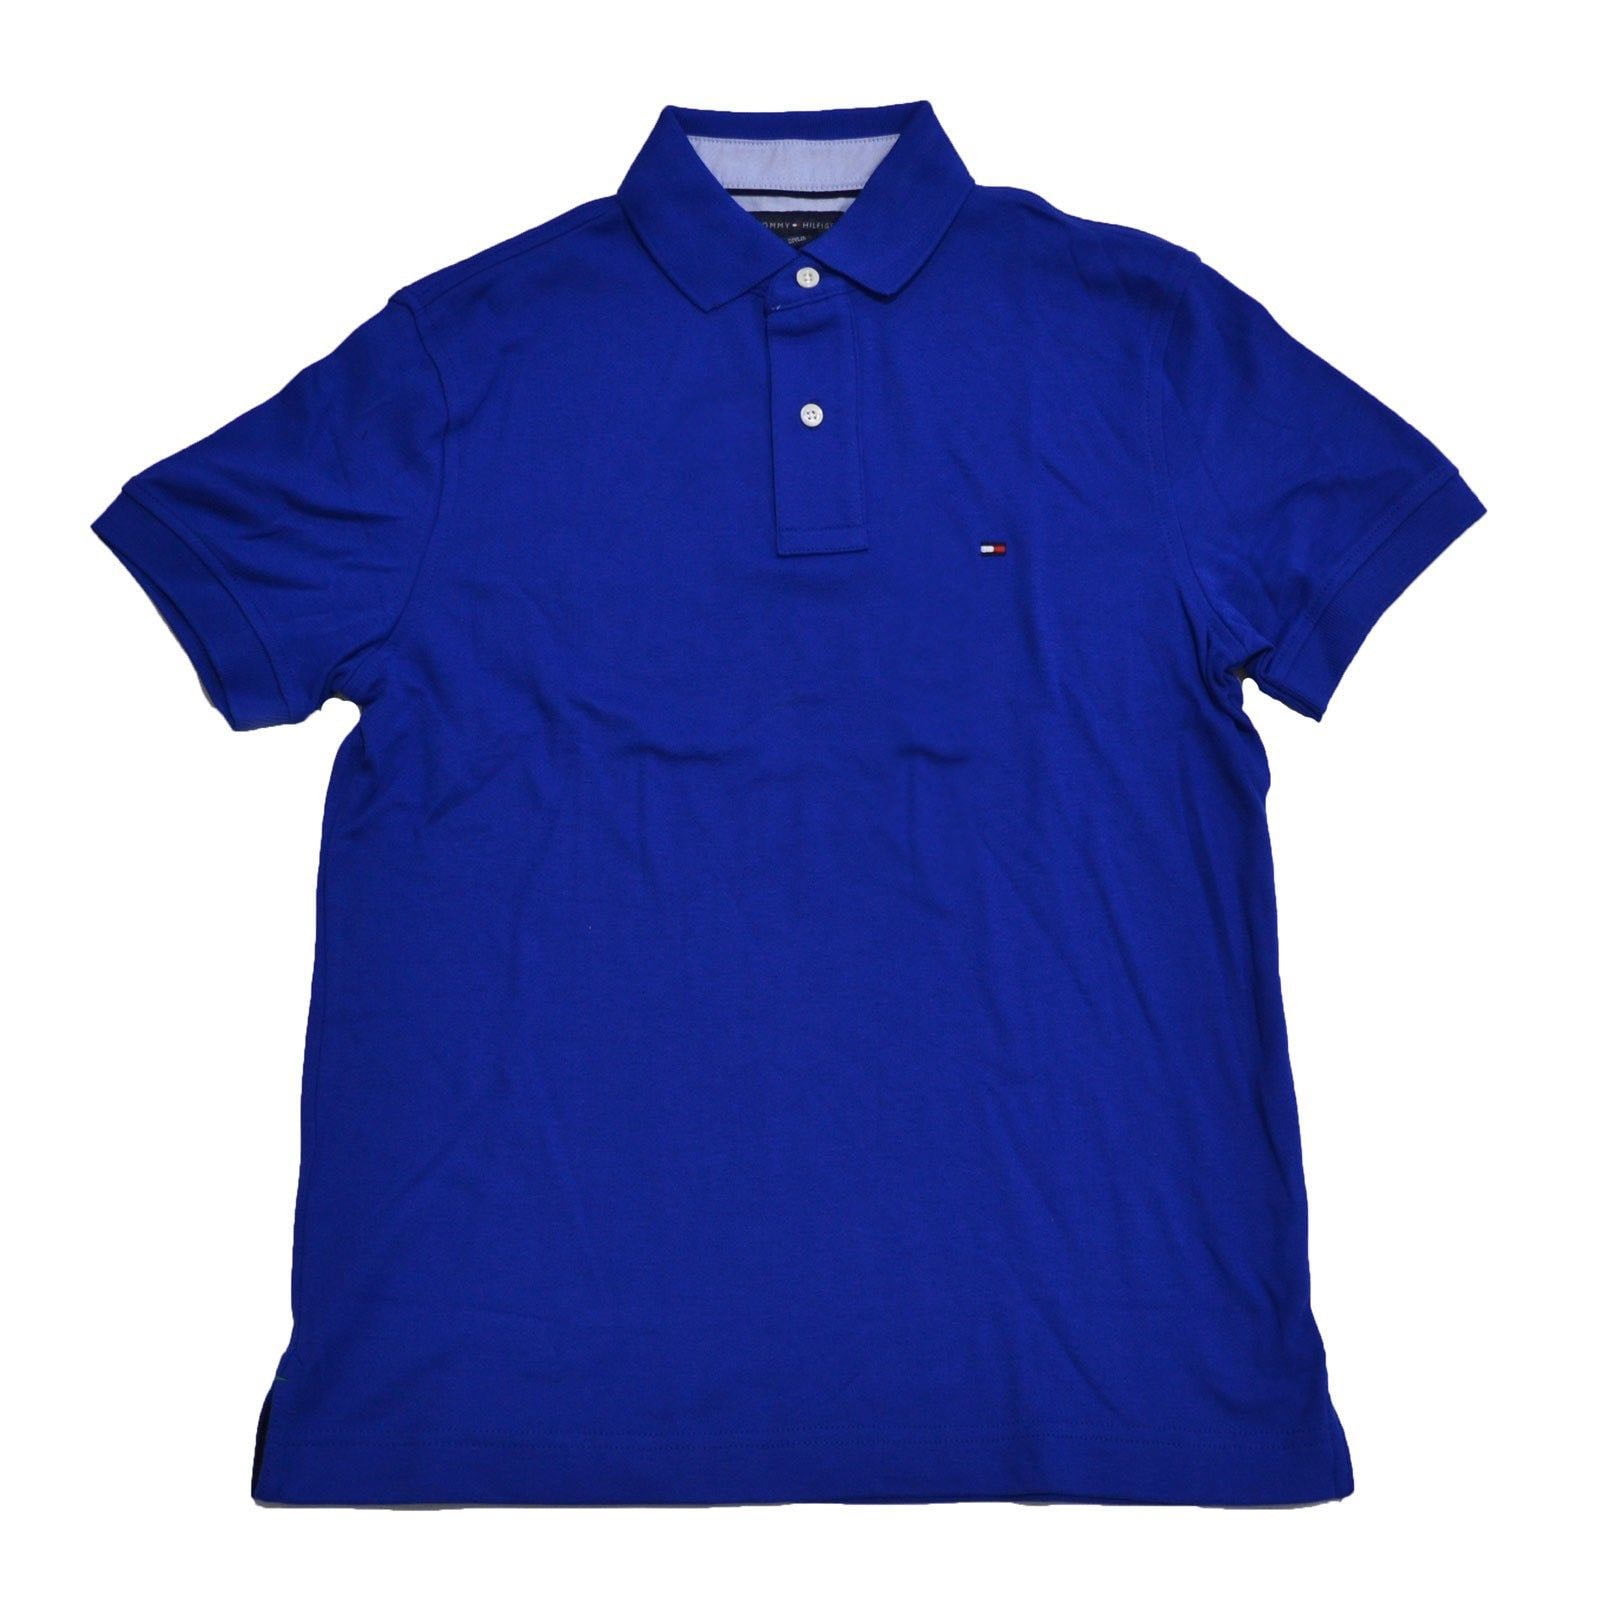 Custom (S, Polo Interlock Deep Mens Hilfiger Tommy Blue) Ocean Shirt Fit